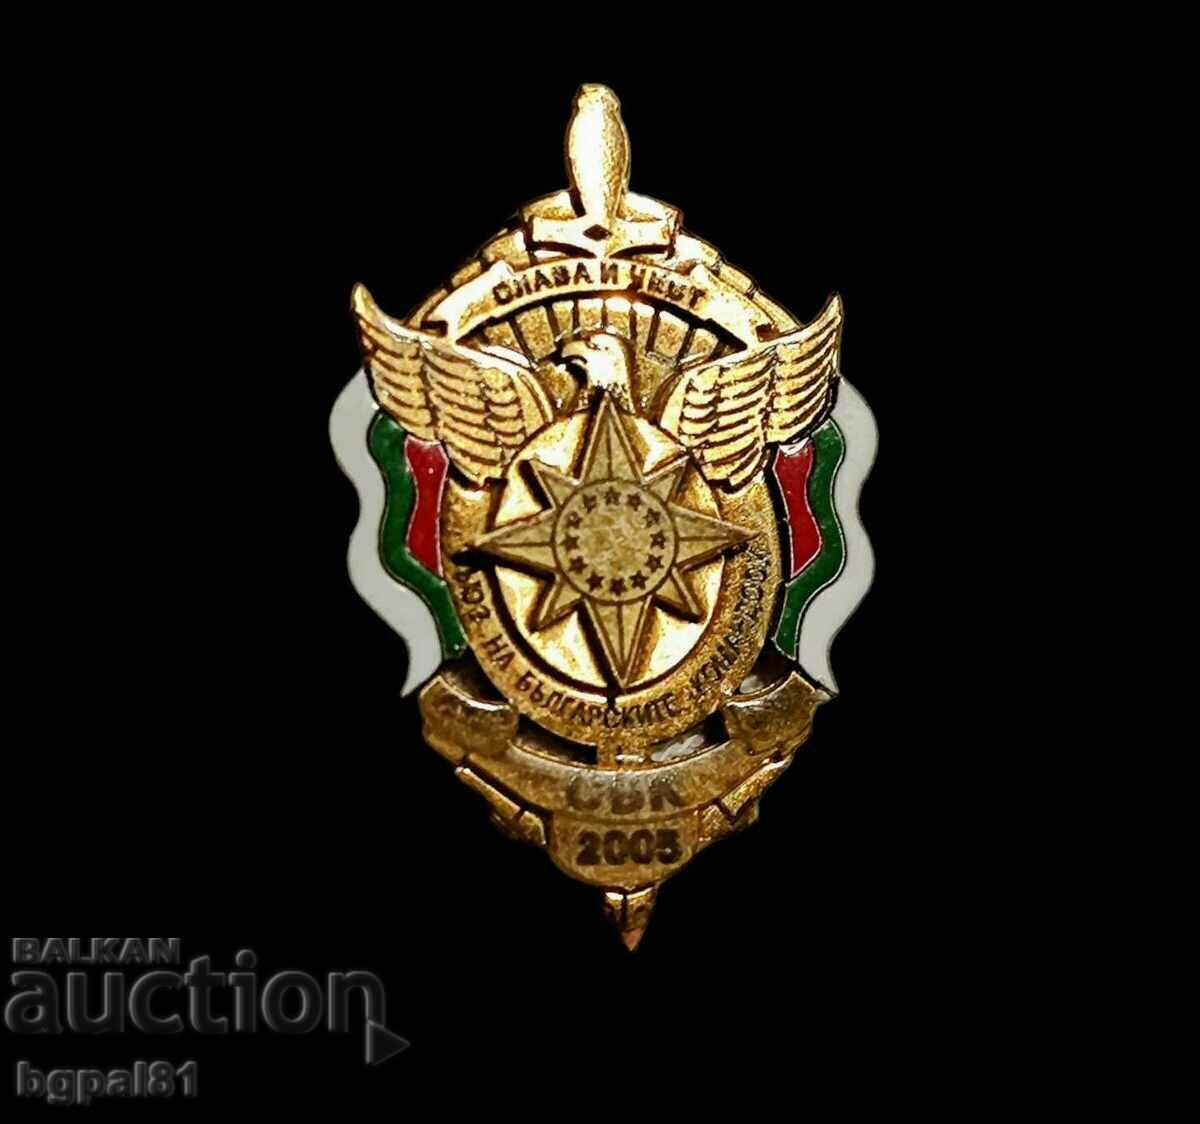 Union of Bulgarian Commandos (SBK) 2005